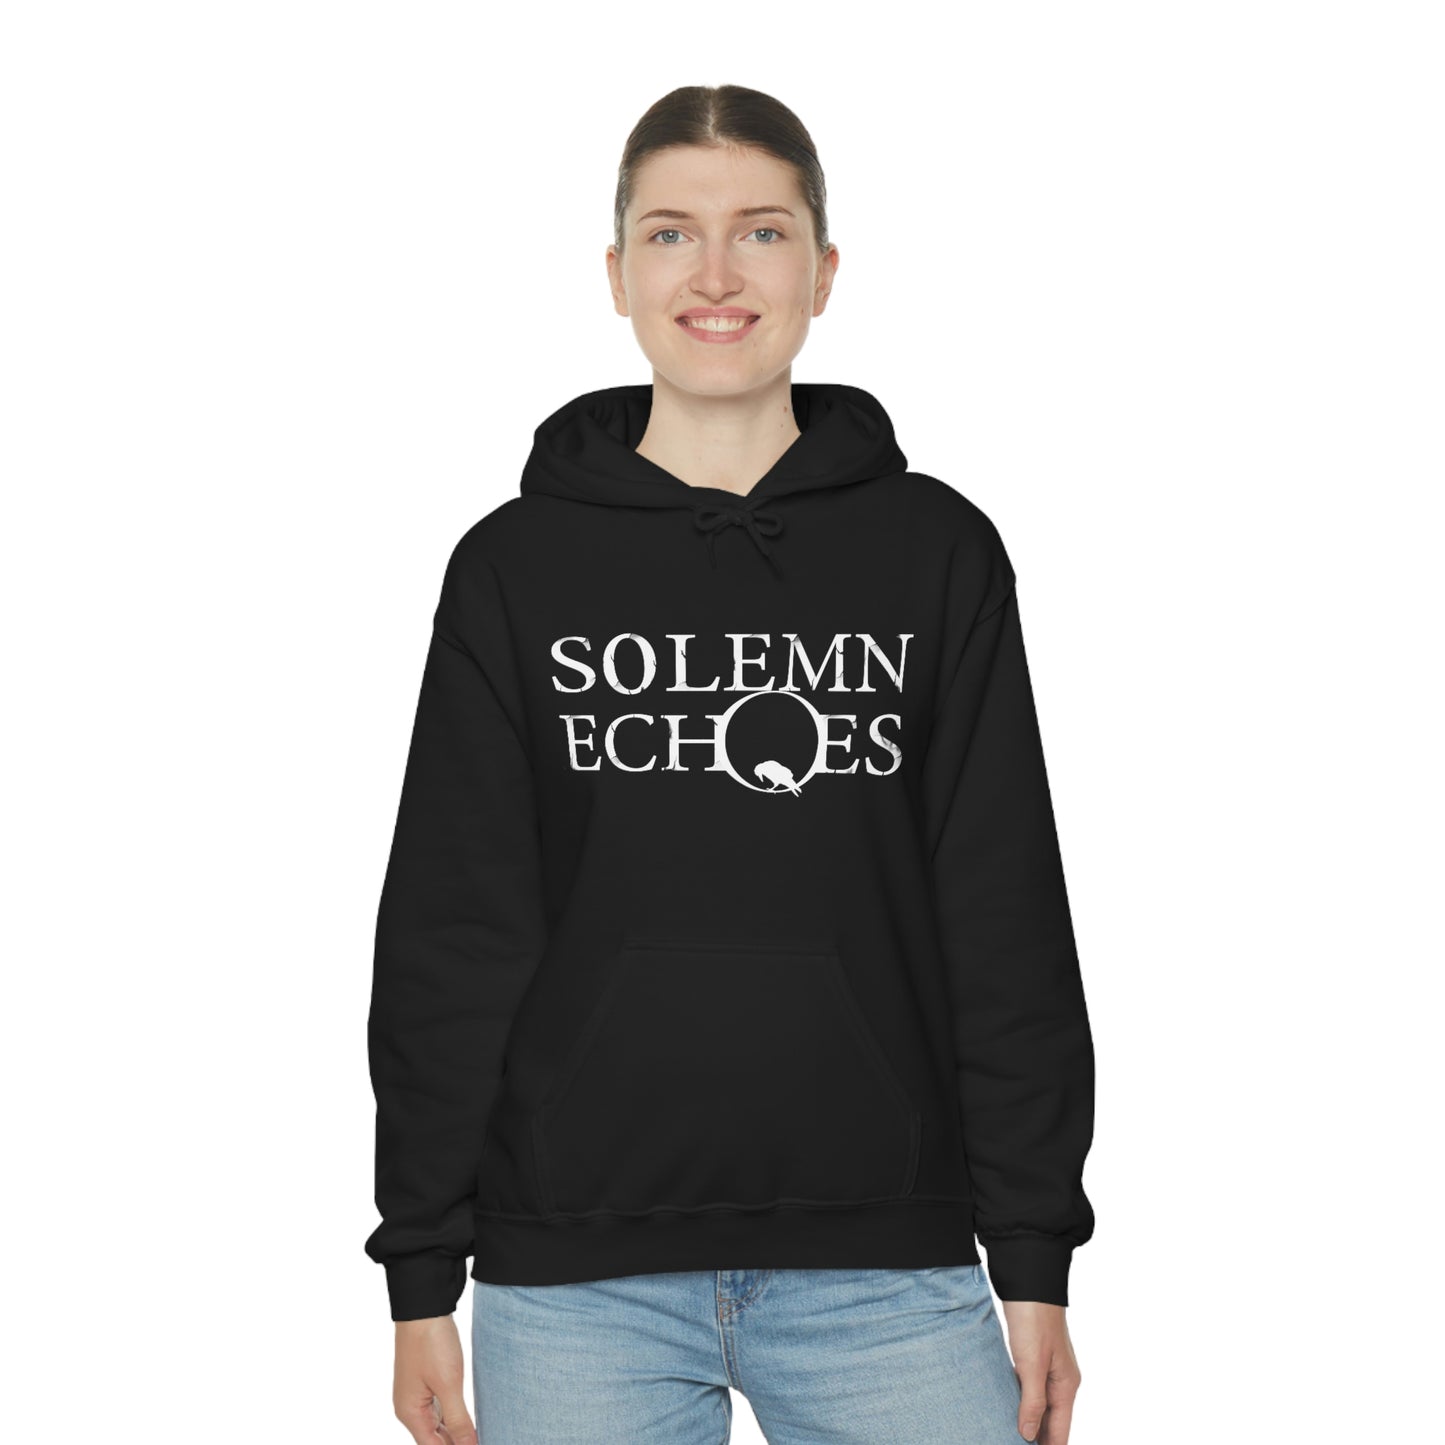 Solemn Echoes - Hooded Sweatshirt